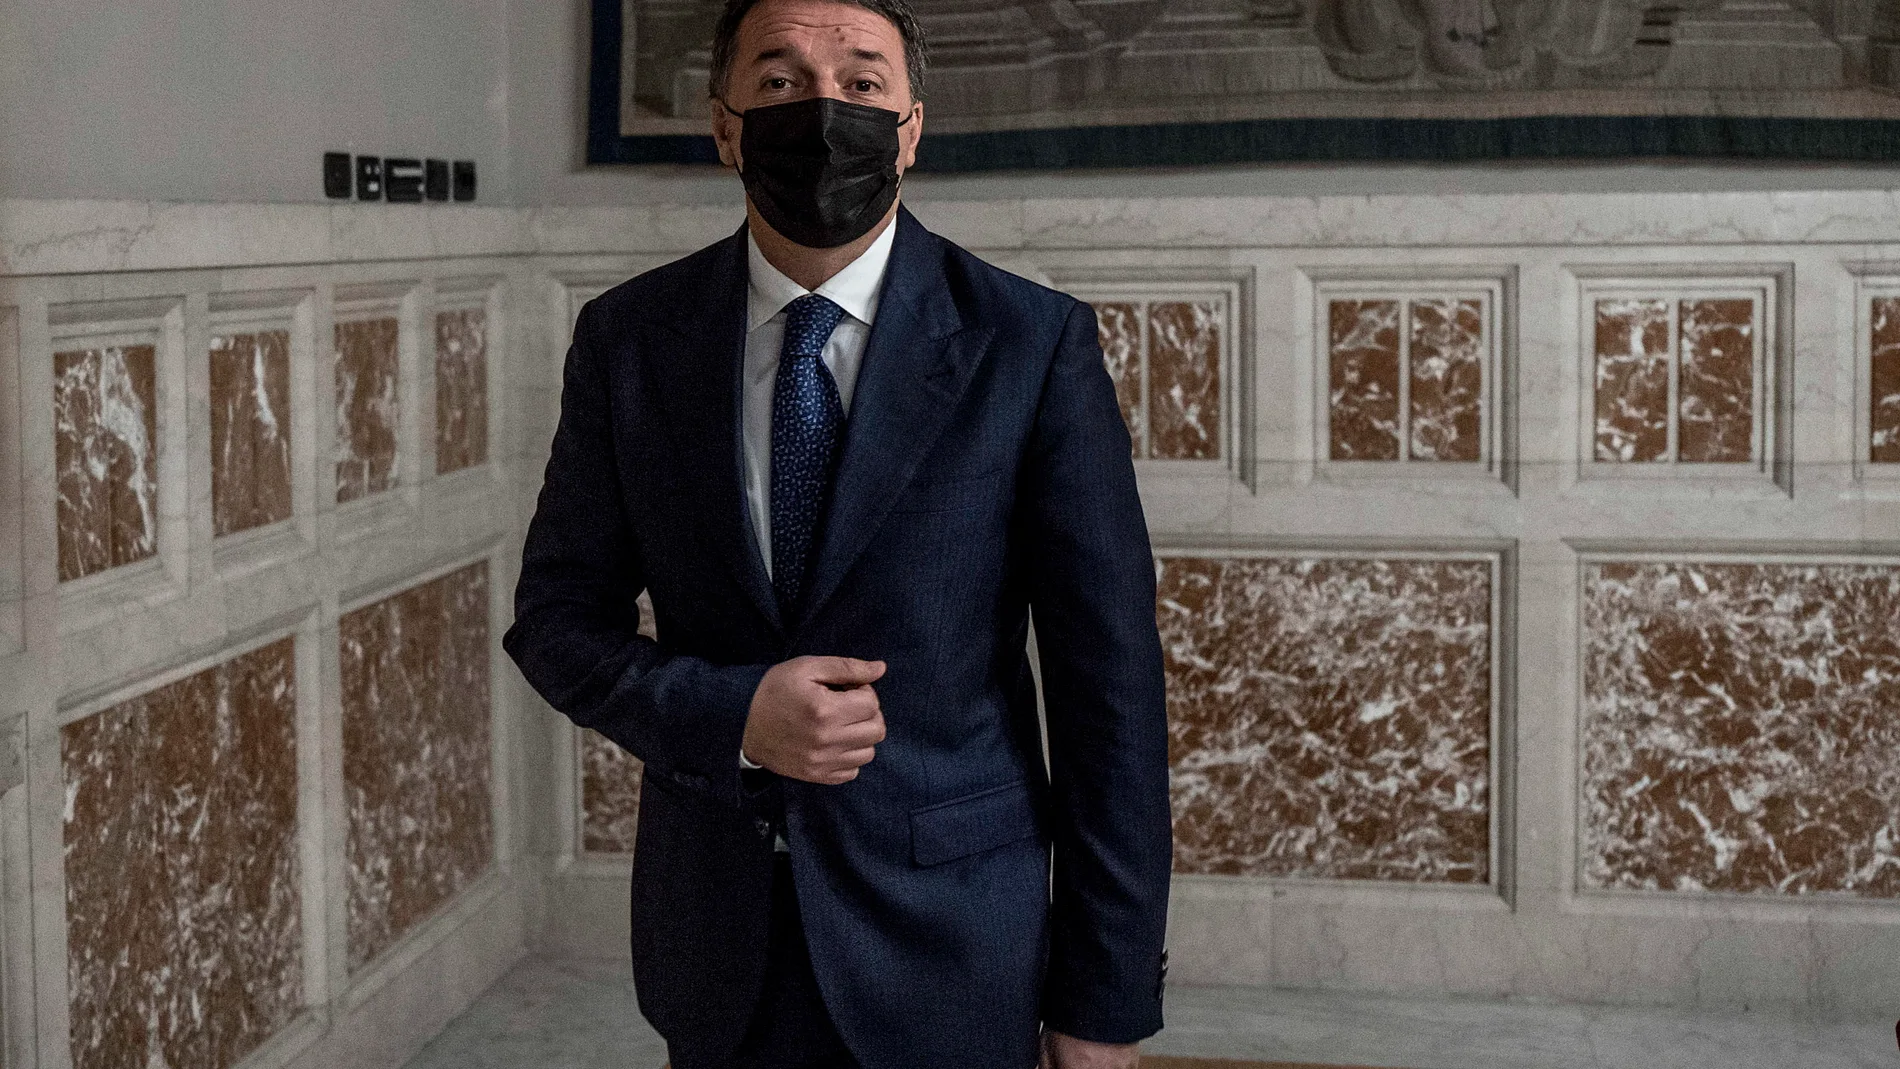 El líder de Italia Viva, Matteo Renzi